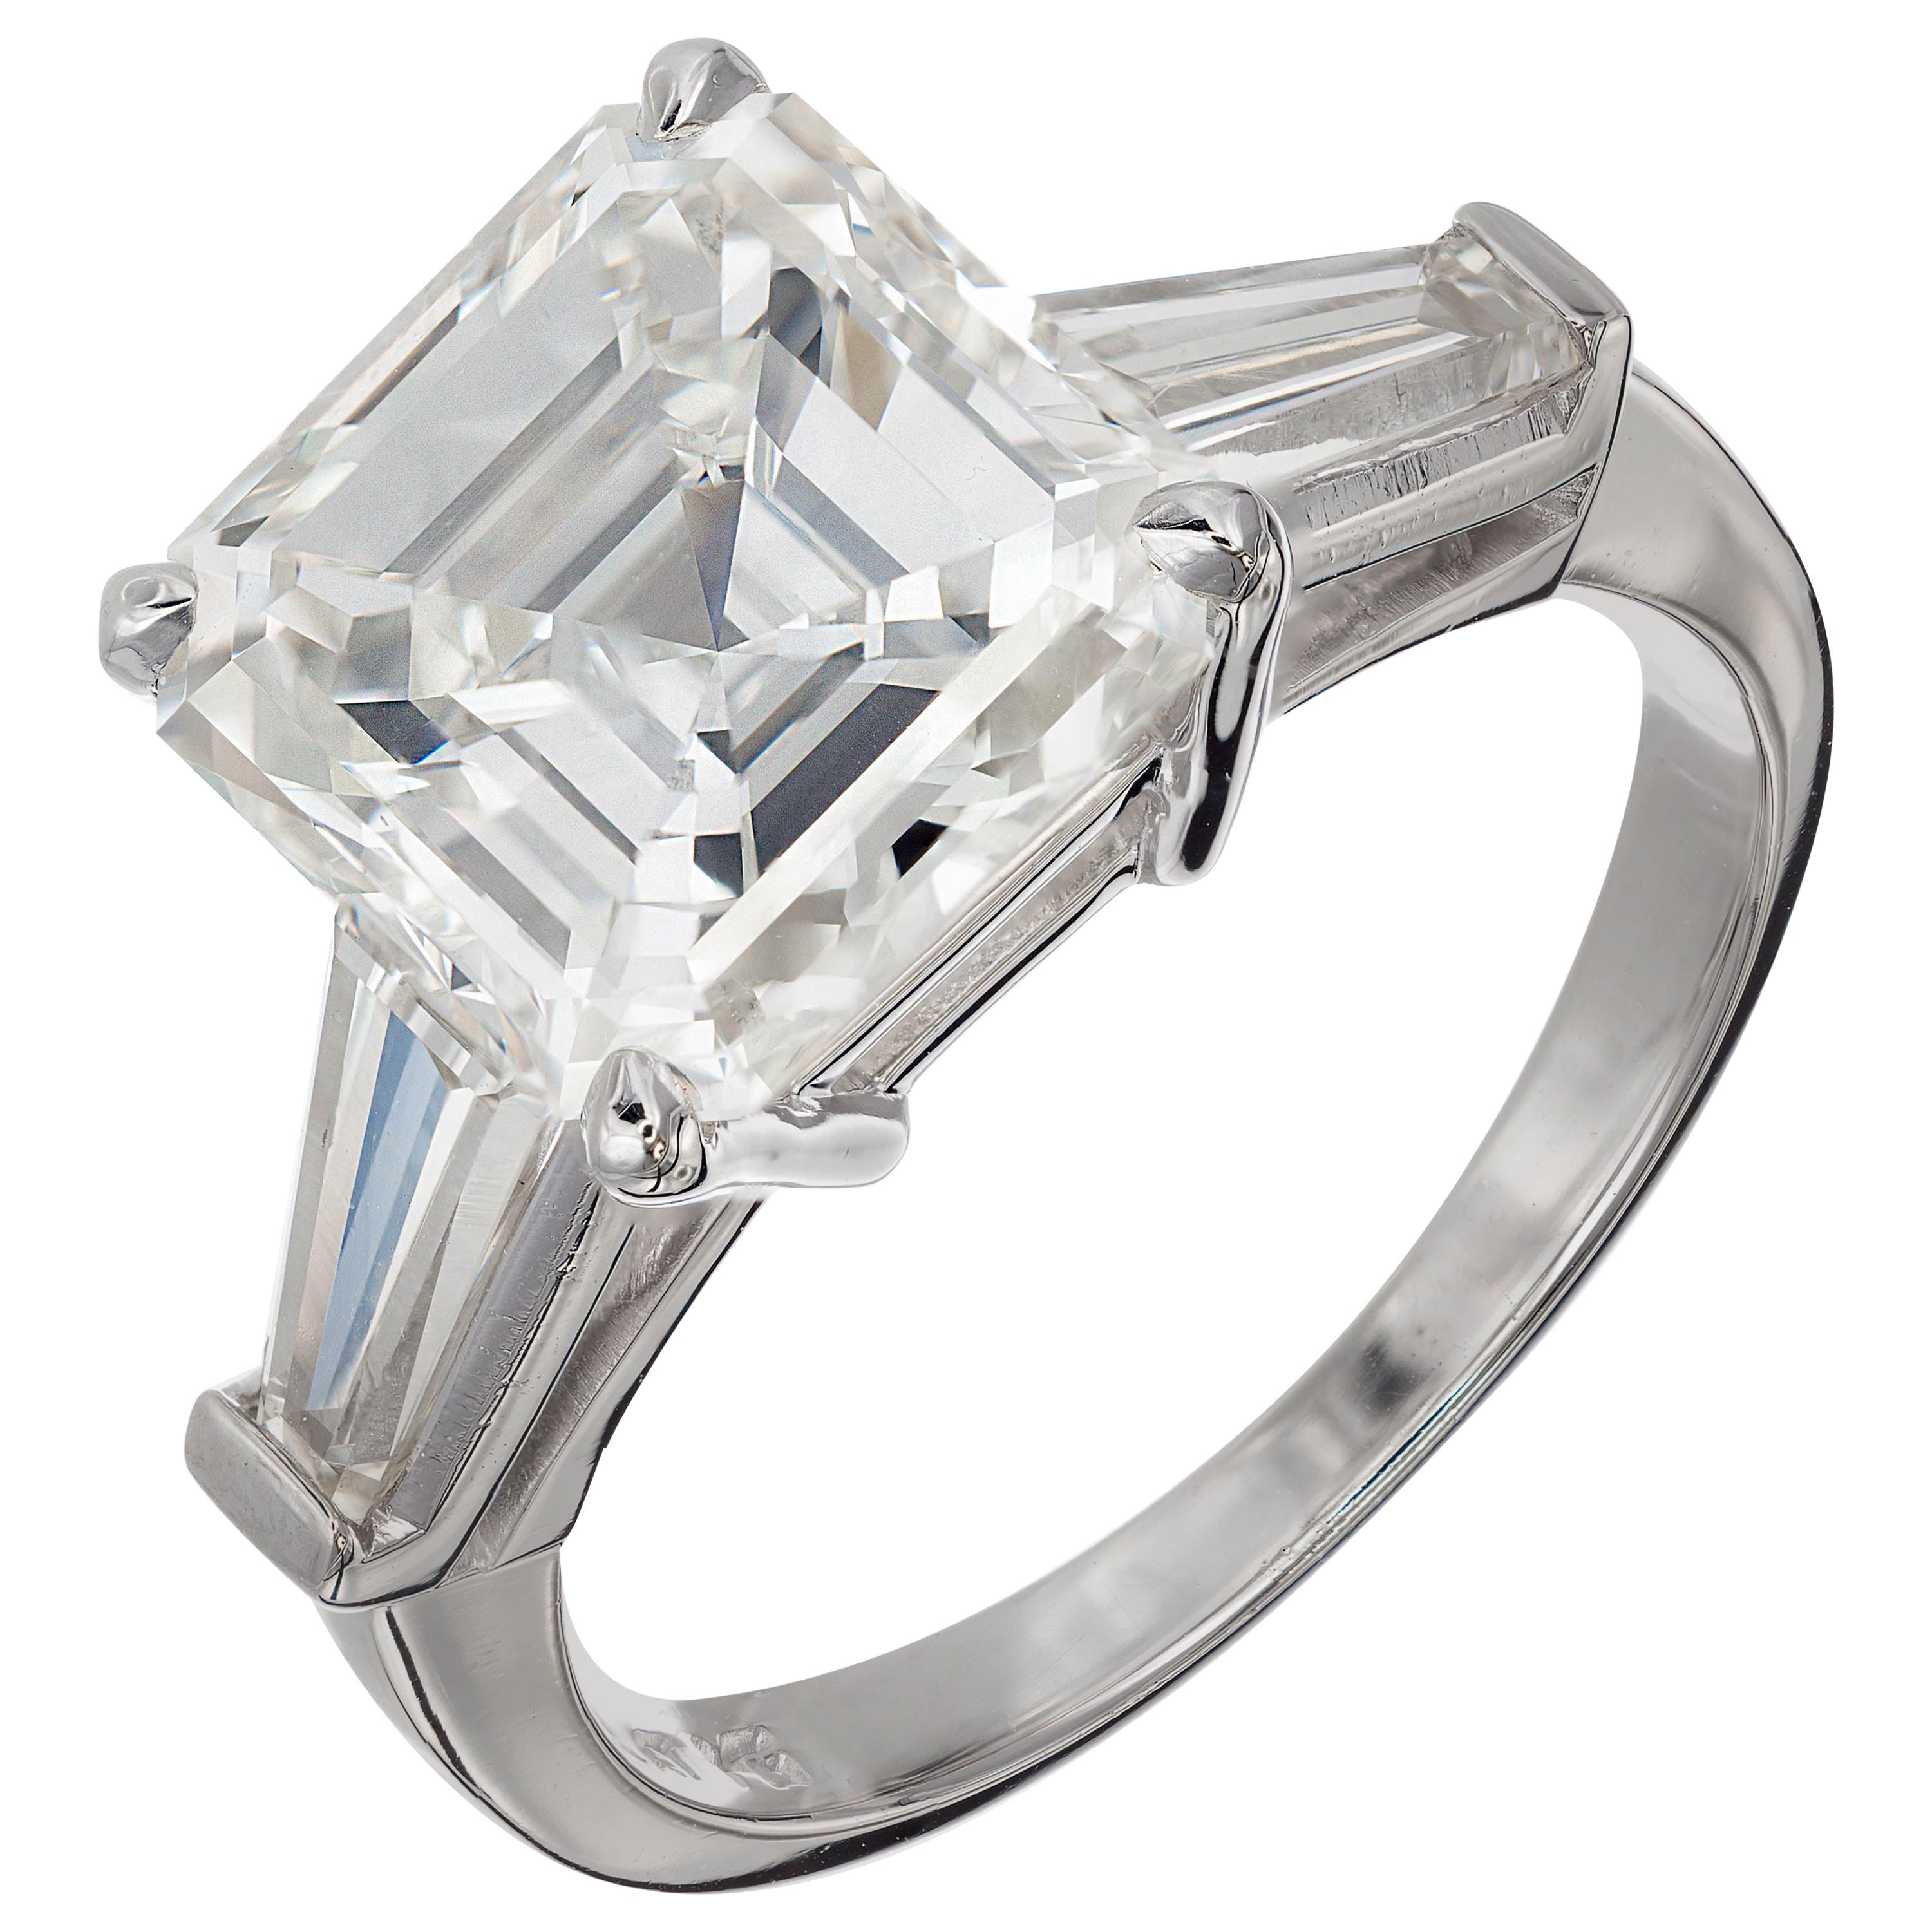 Peter Suchy 4.41 Carat Diamond Three-Stone Platinum Engagement Ring